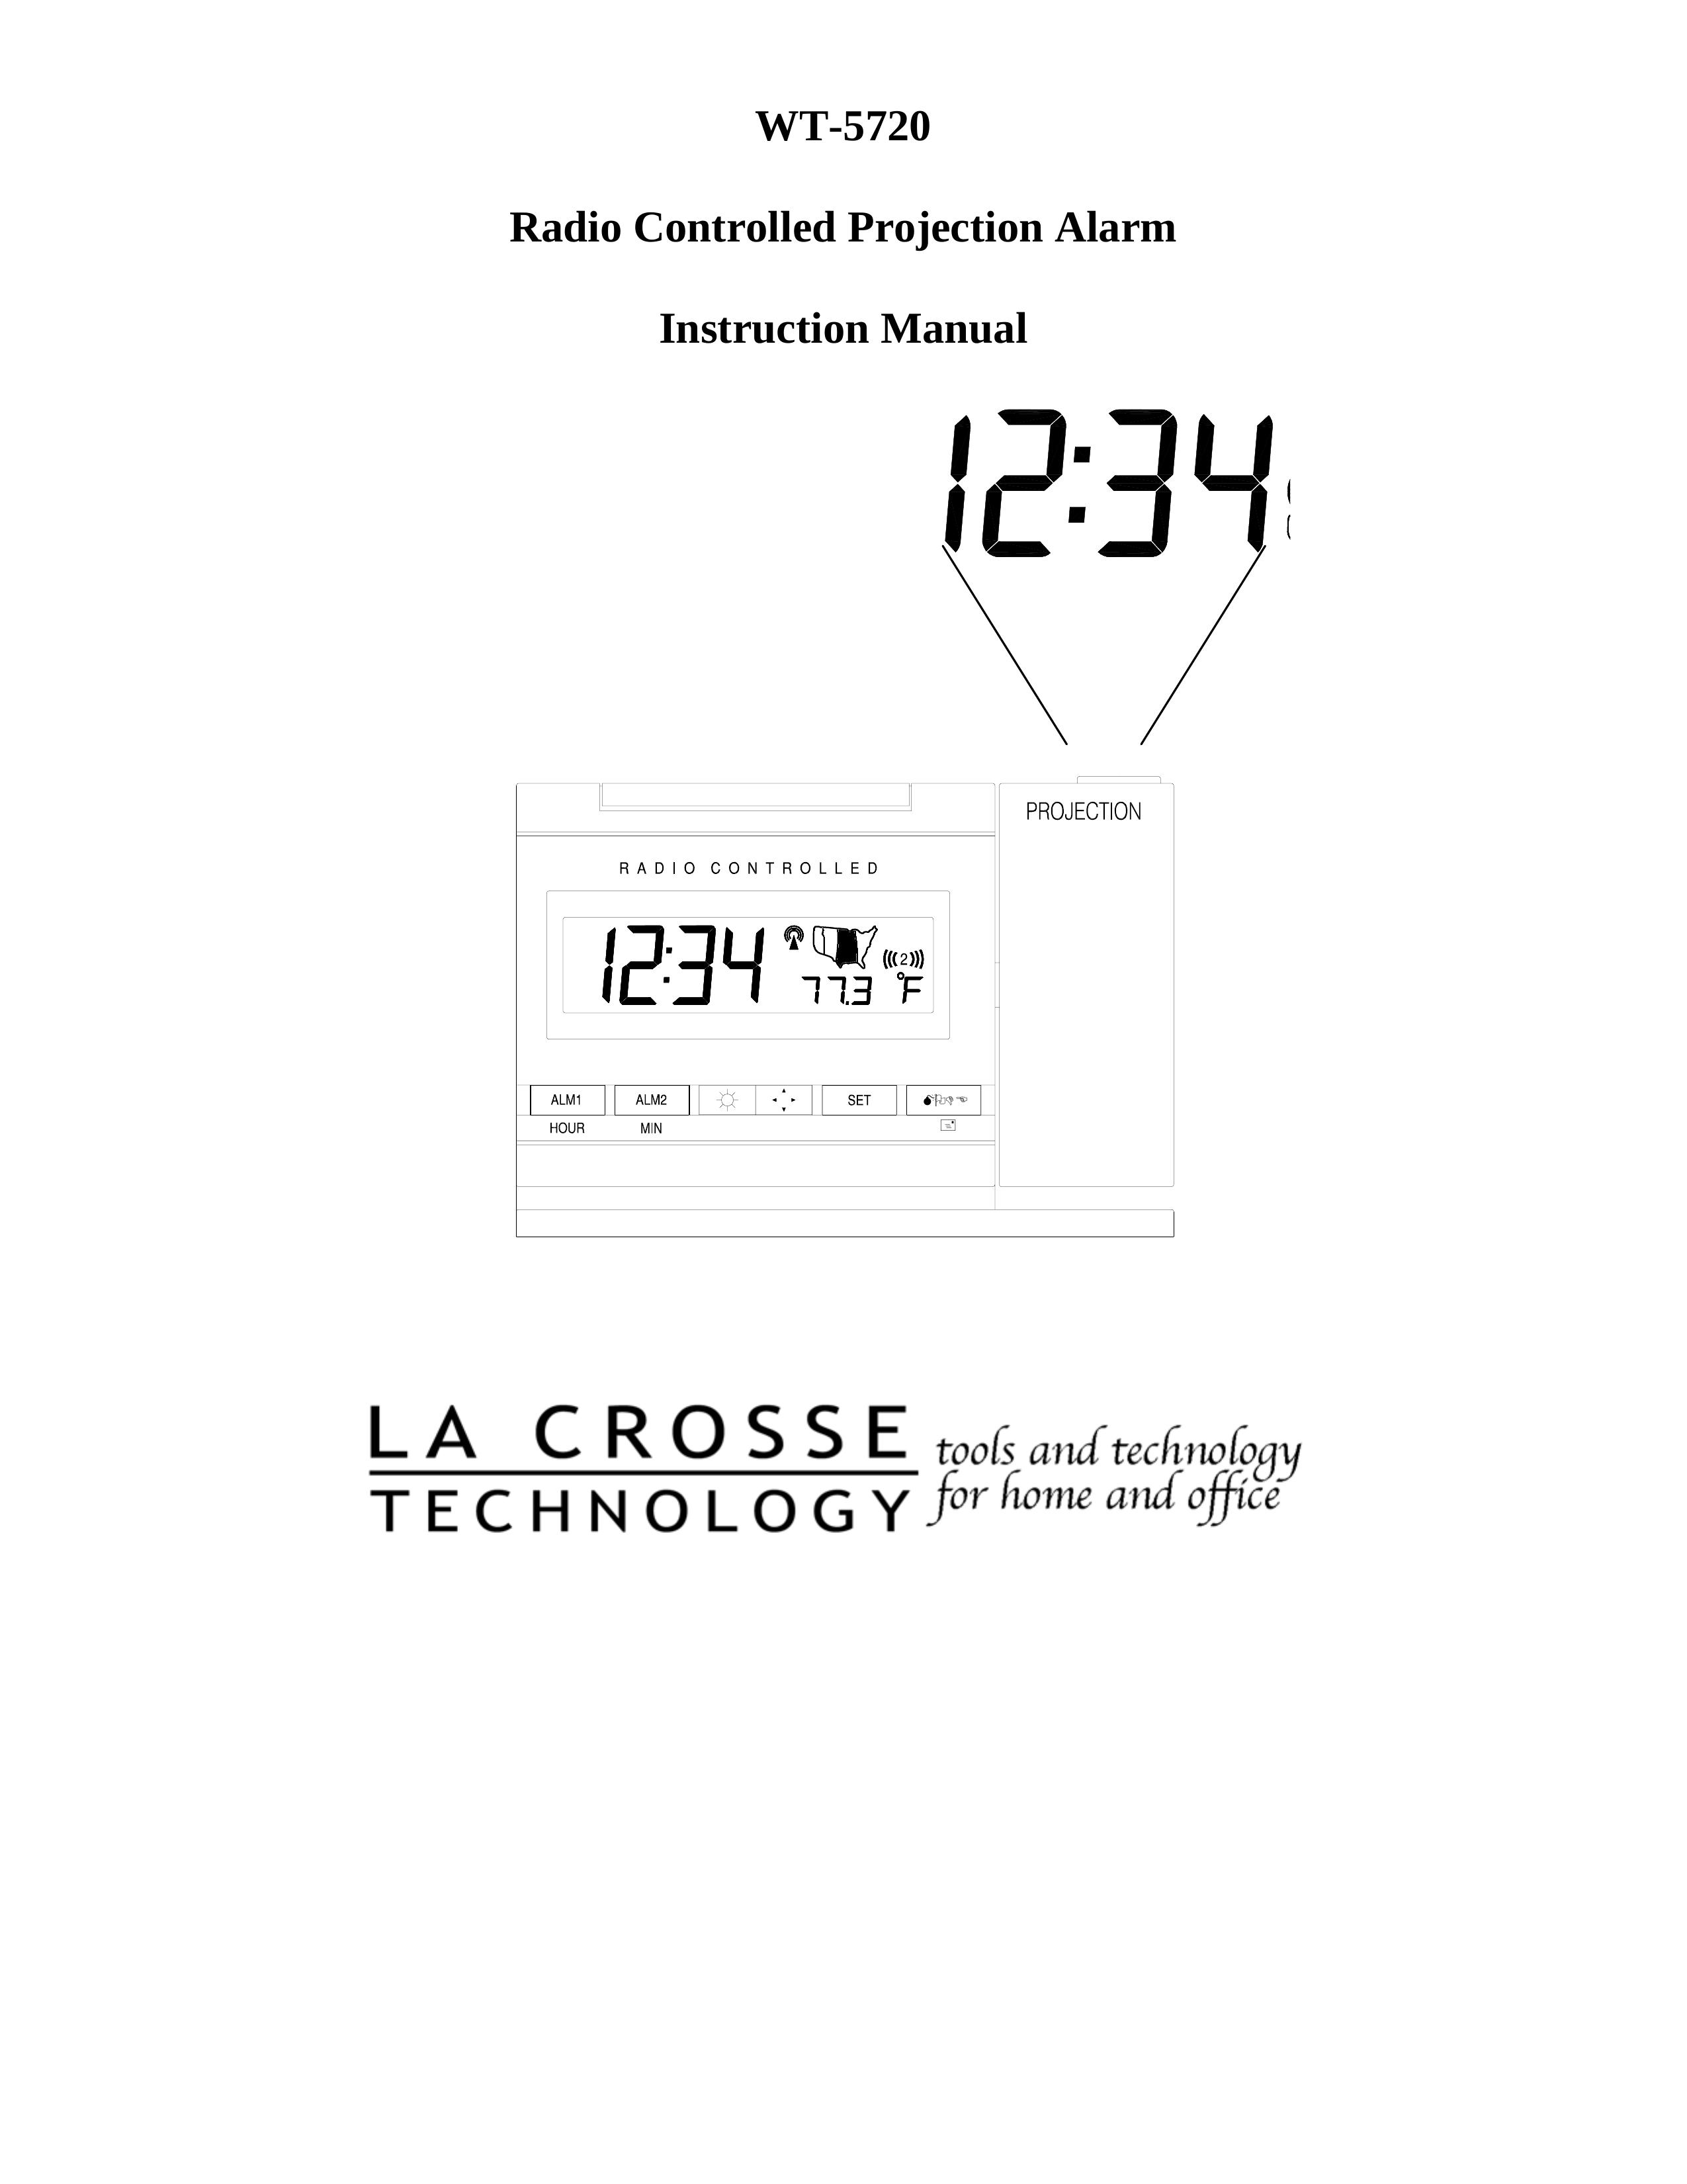 La Crosse Technology WT-5720 Clock Radio User Manual